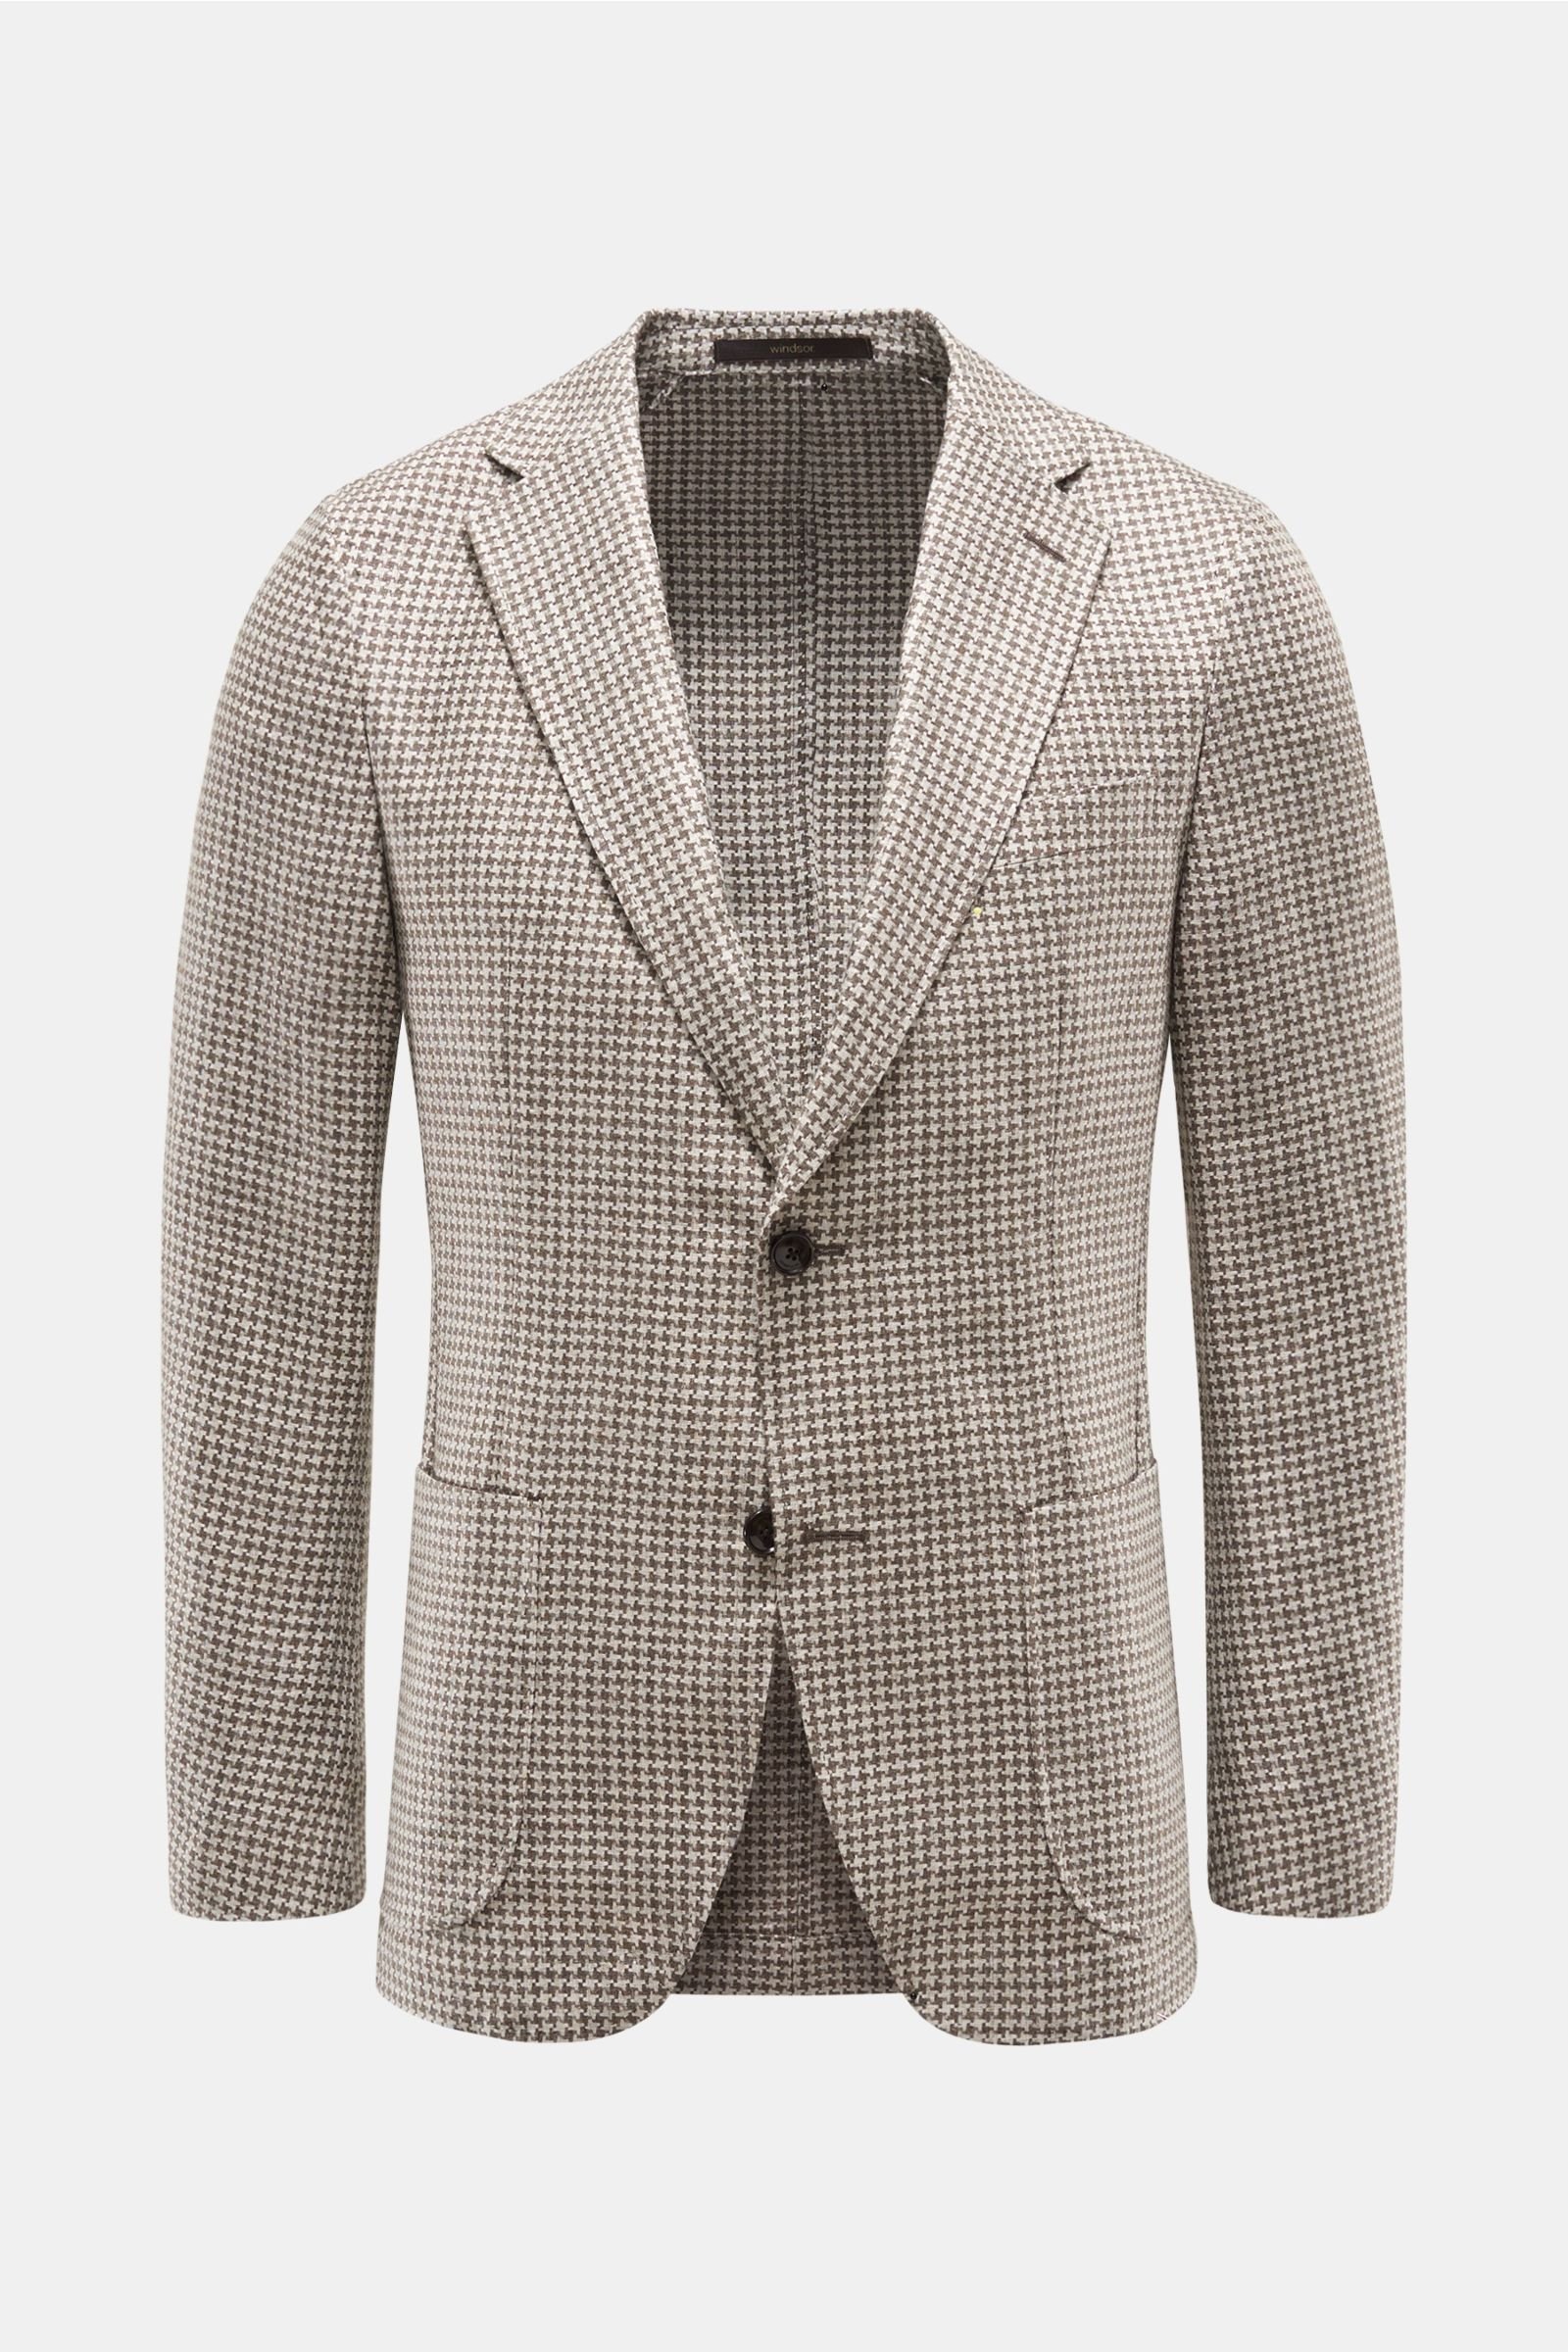 Linen smart-casual jacket 'Giro' grey-brown checked